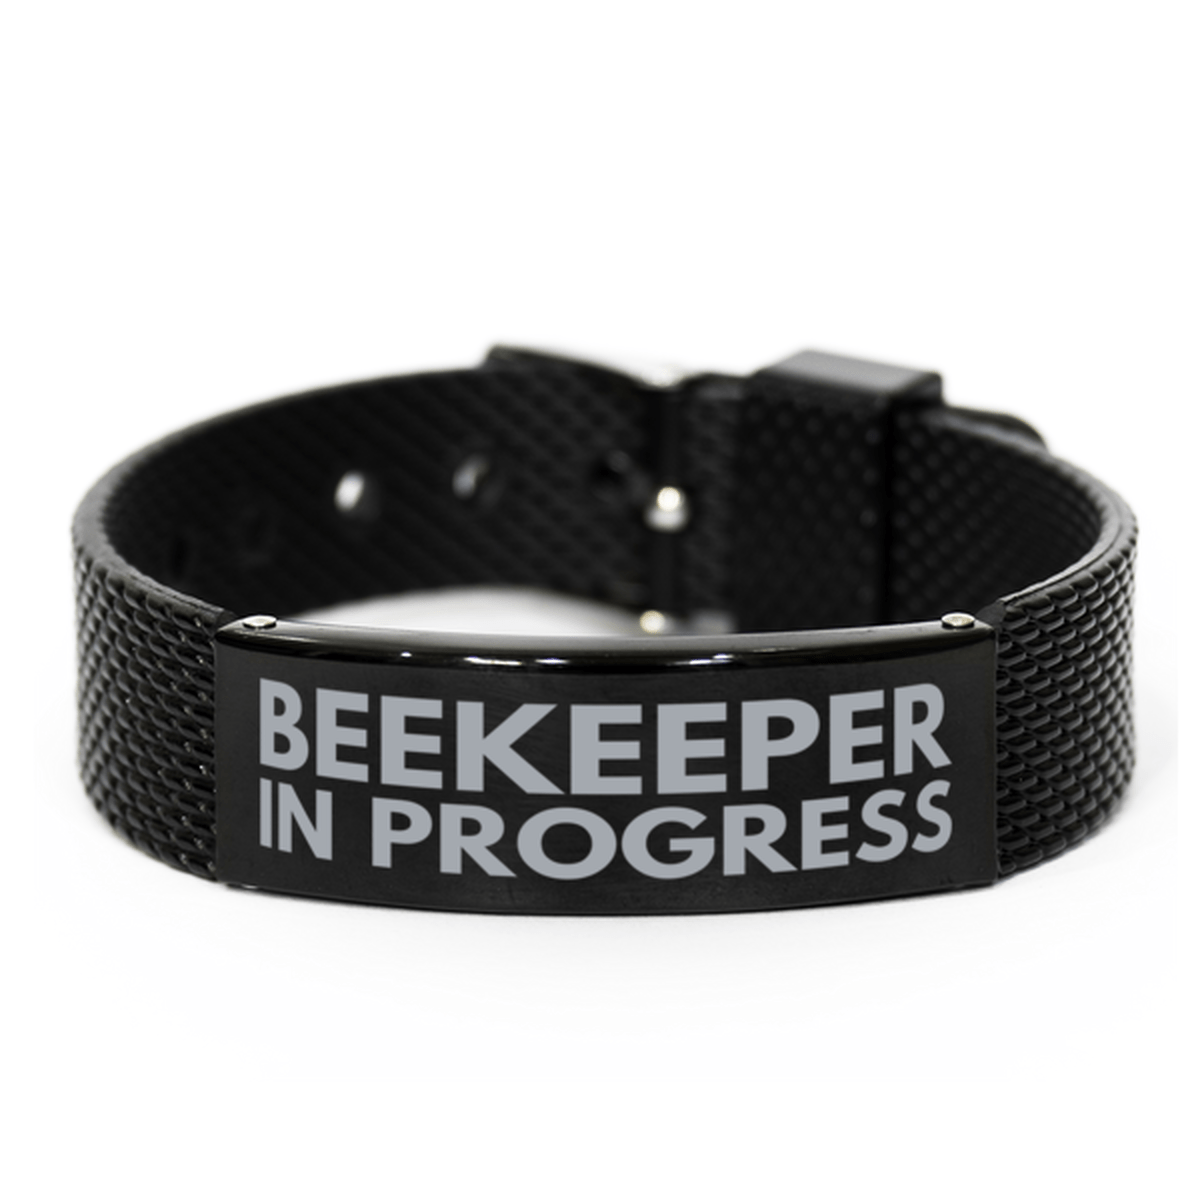 Inspirational Beekeeper Black Shark Mesh Bracelet, Beekeeper In Progress, Best Graduation Gifts for Students